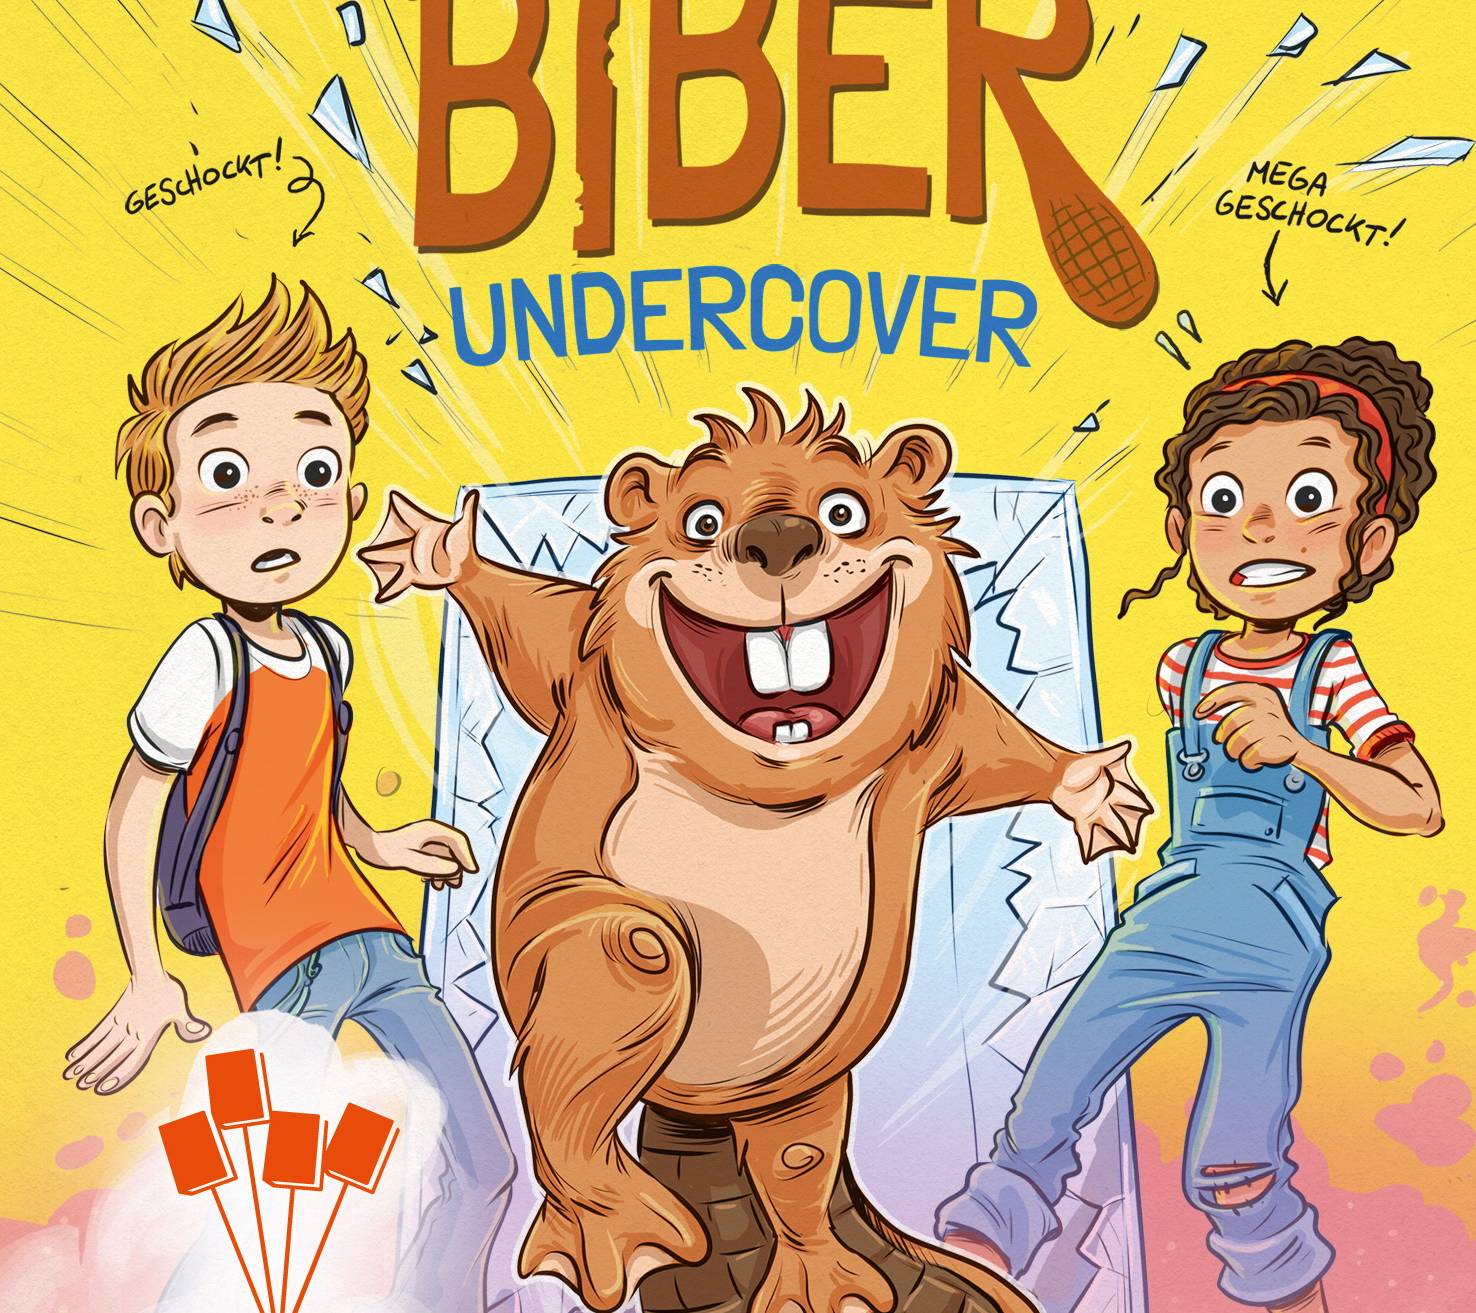  Der Comicroman „Biber undercover“. 